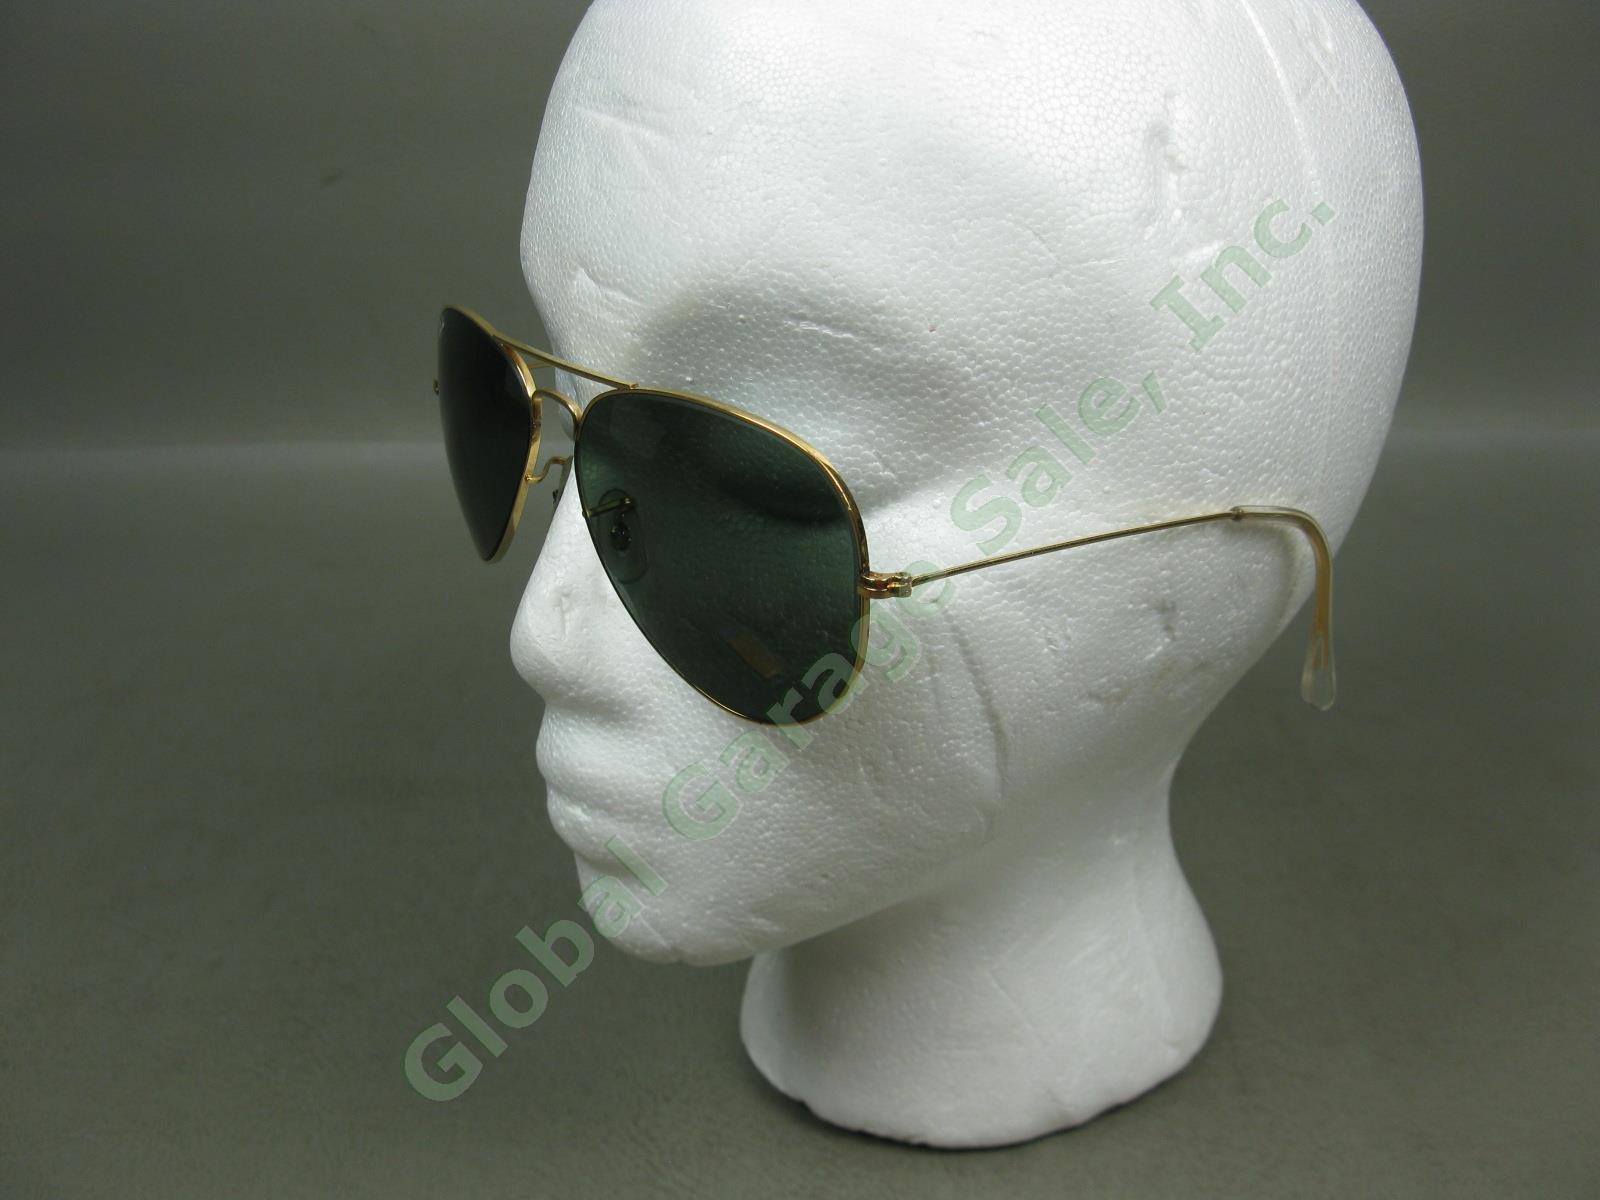 B&L Ray Ban 58 14 Green Lens Gold Aviator Outdoorsman Sunglasses +Belt-Loop Case 2